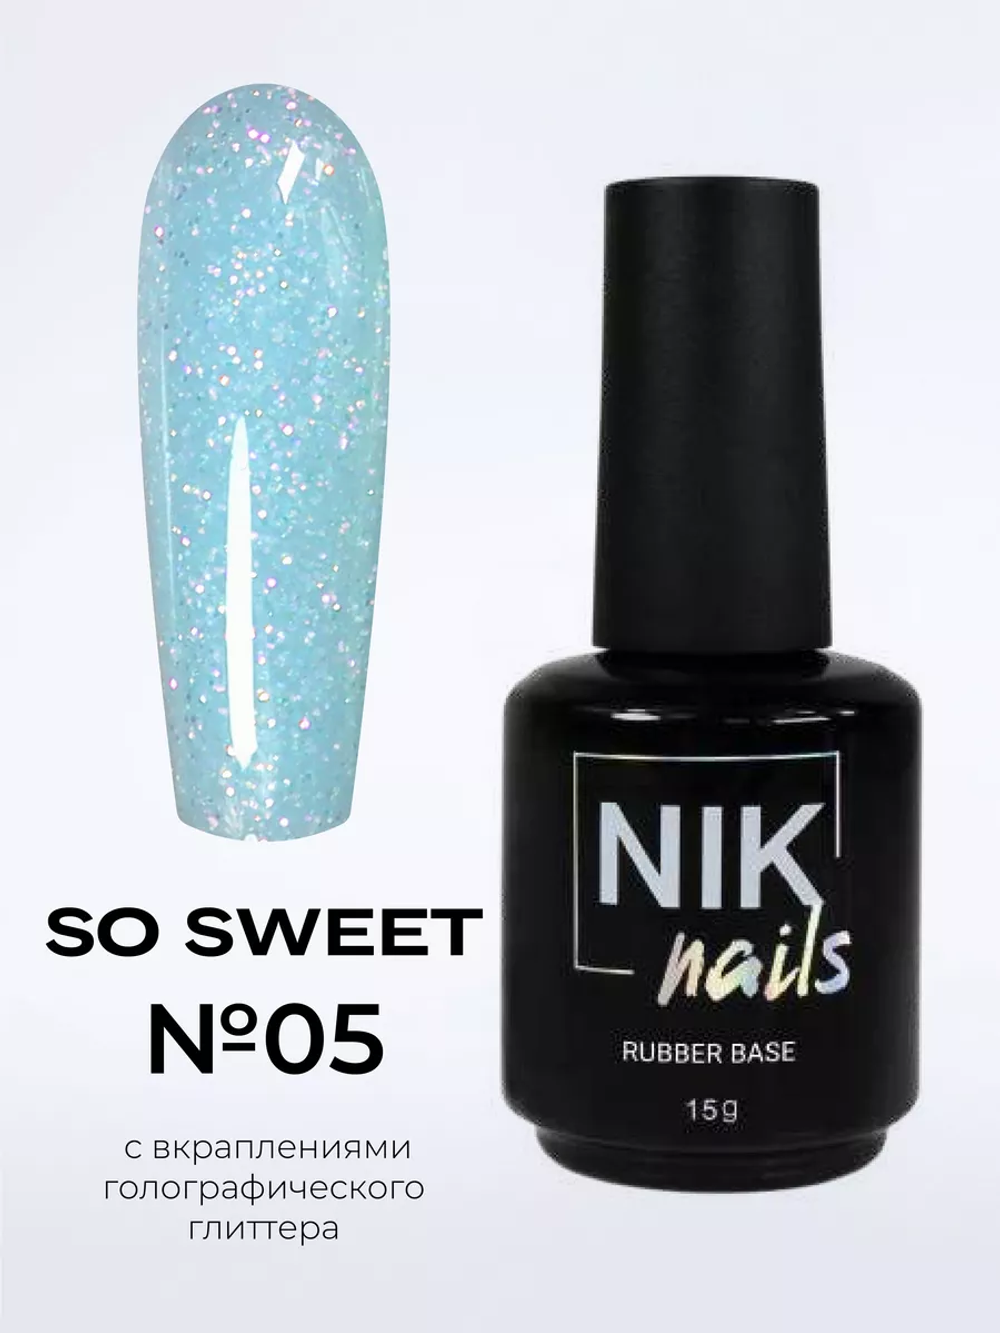 Камуфлирующая база Nik Nails So Sweet Rubber Base № 05 15 g